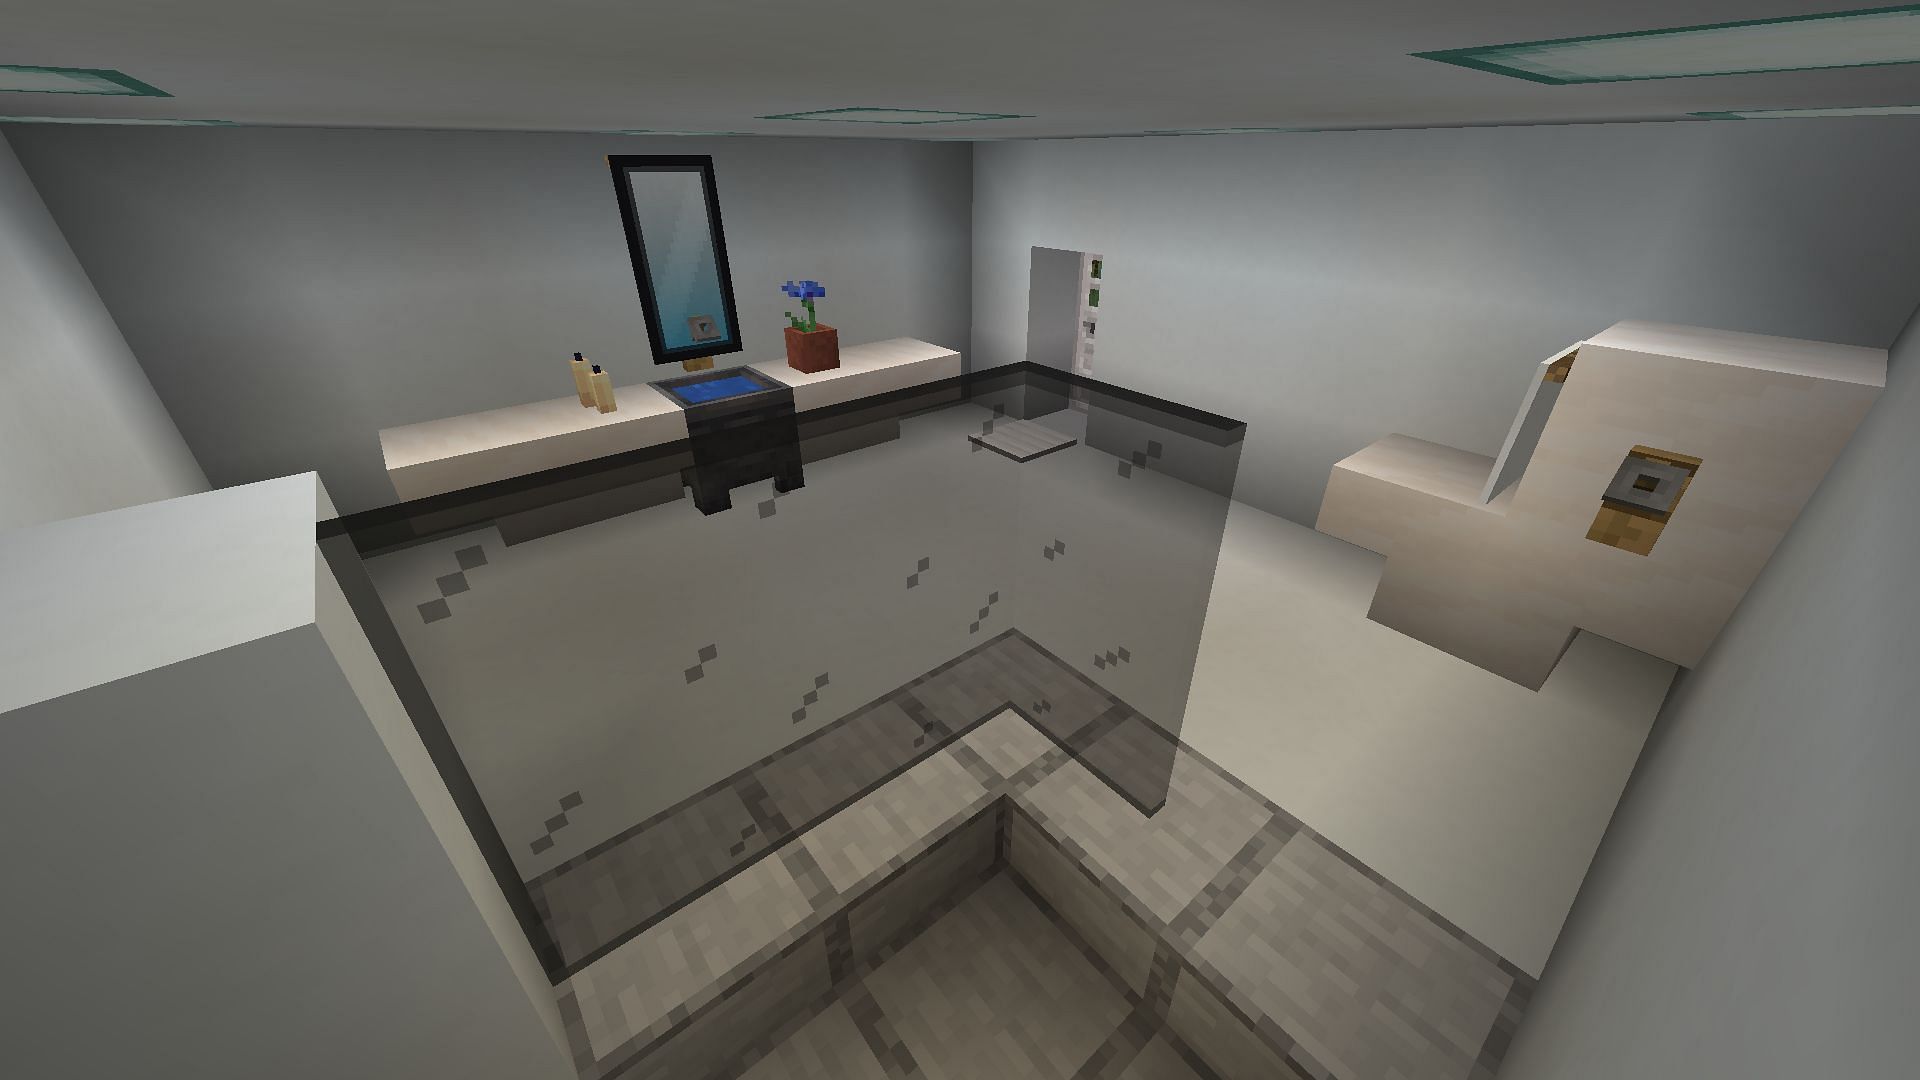 An example of a modern bathroom build (Image via Minecraft)